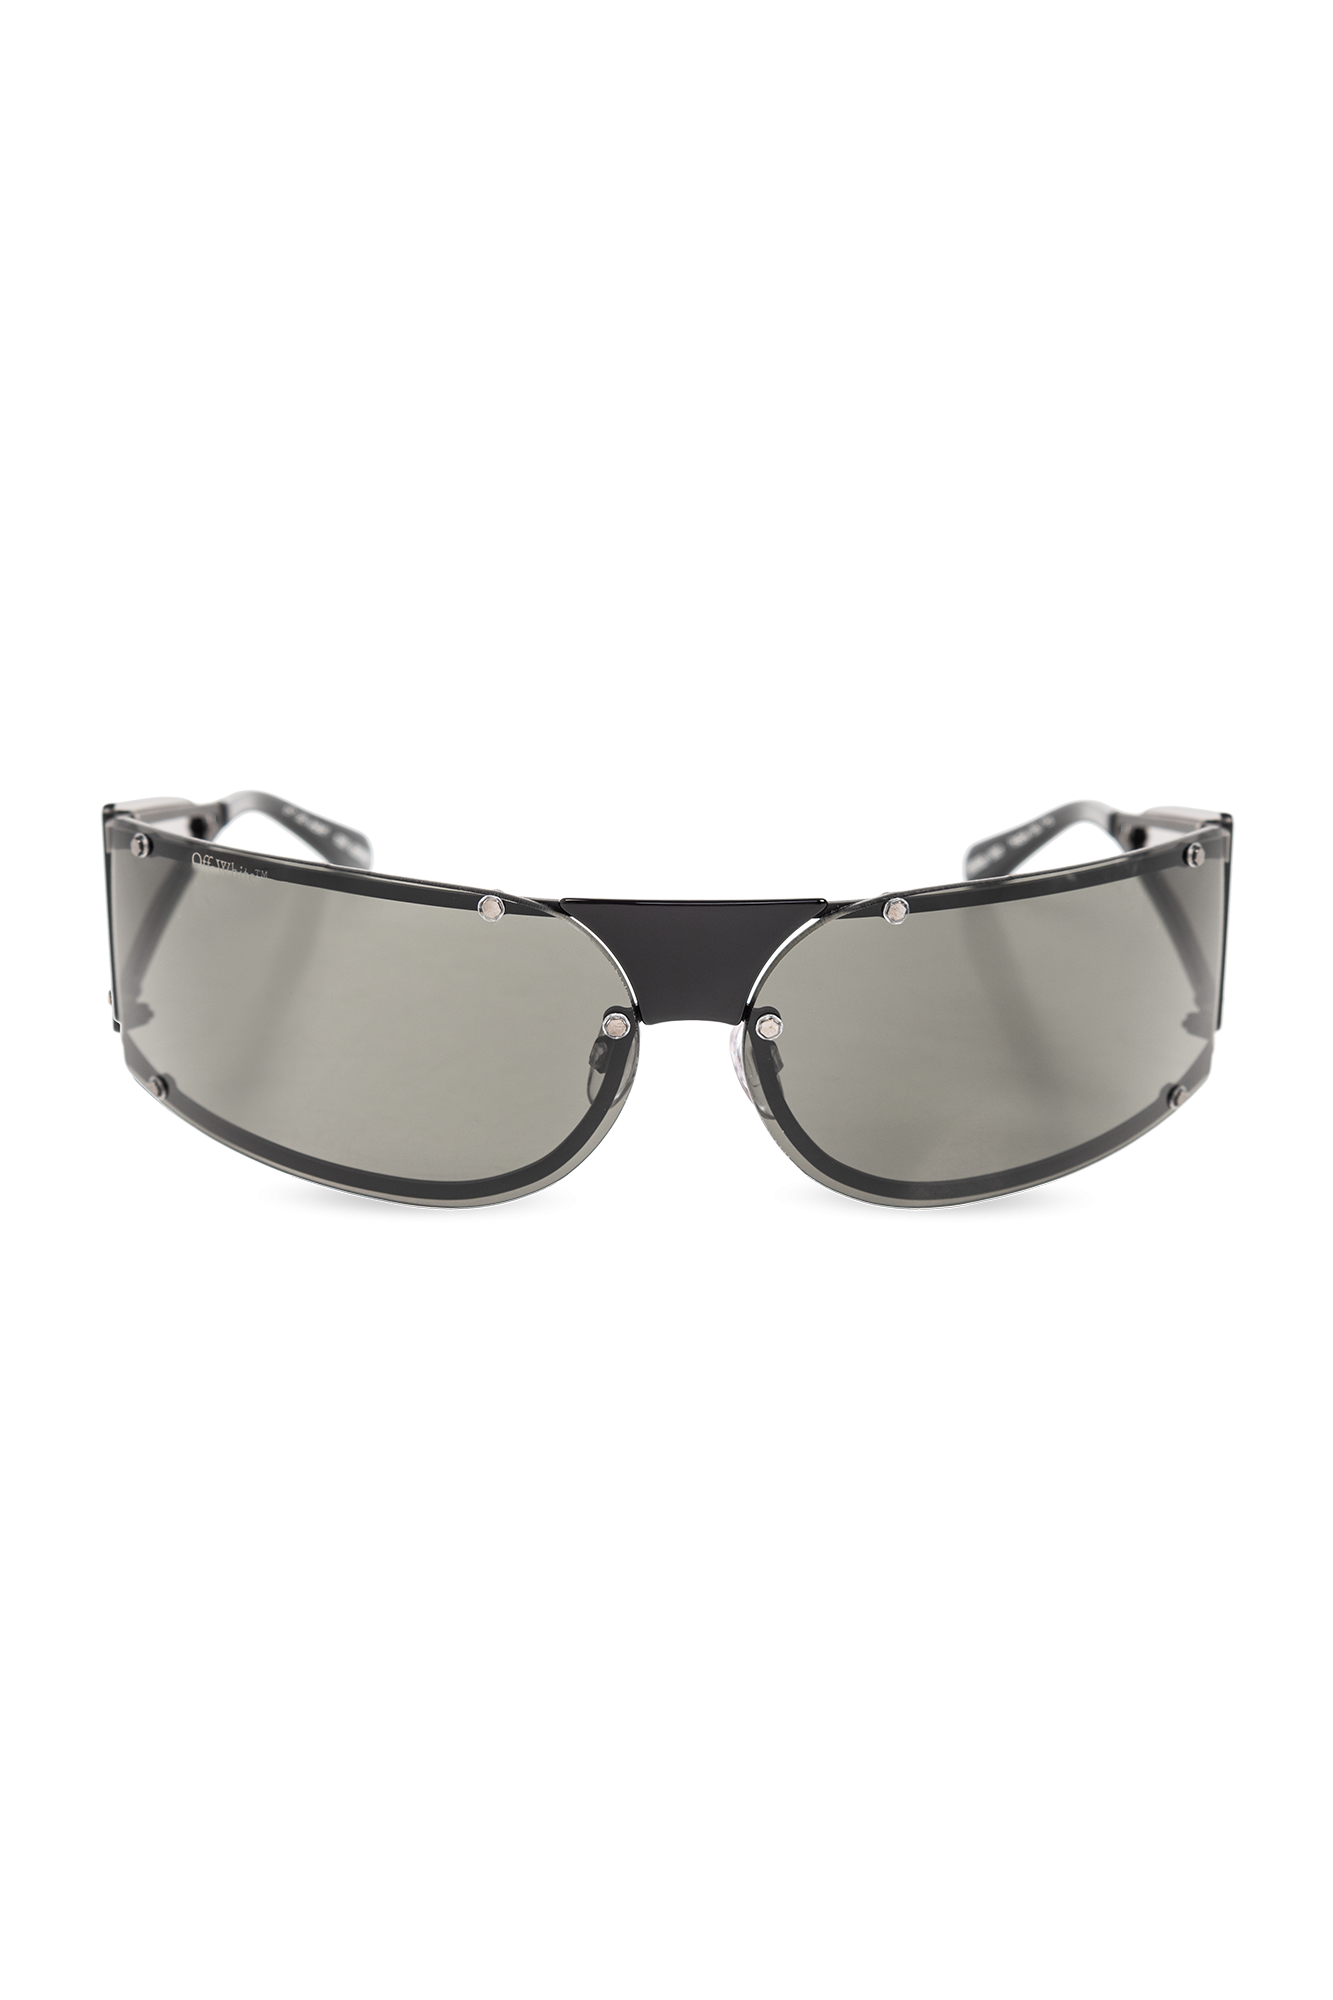 Off-White ‘Kenema’ sunglasses